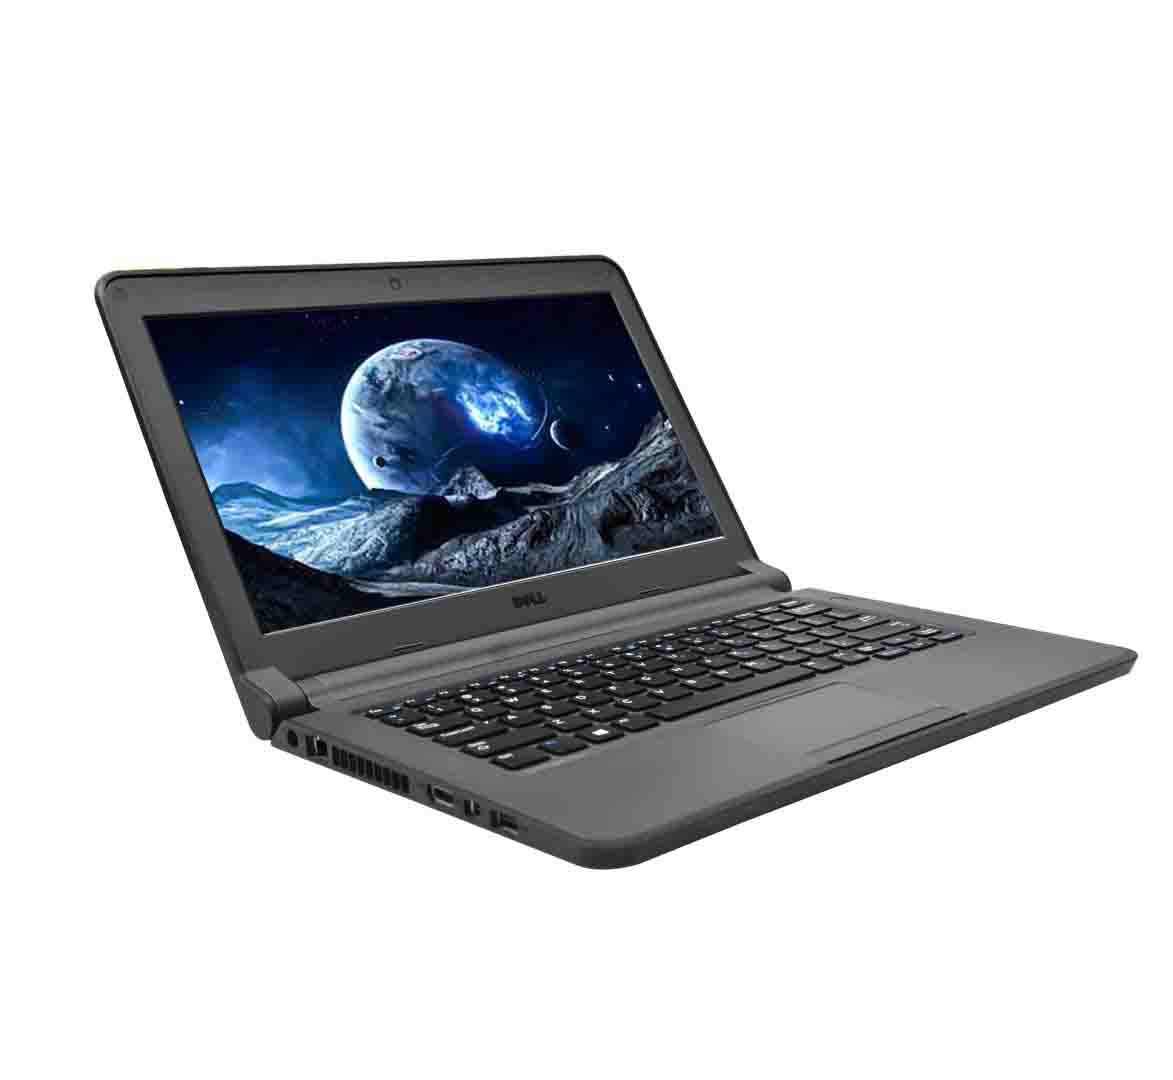 Dell Latitude 3340 Business Laptop, Intel Core i3-4th Gen. CPU, 4GB RAM, 250GB HDD, 13.3 inch Touchscreen, Windows 10 Pro, Refurbished Laptop